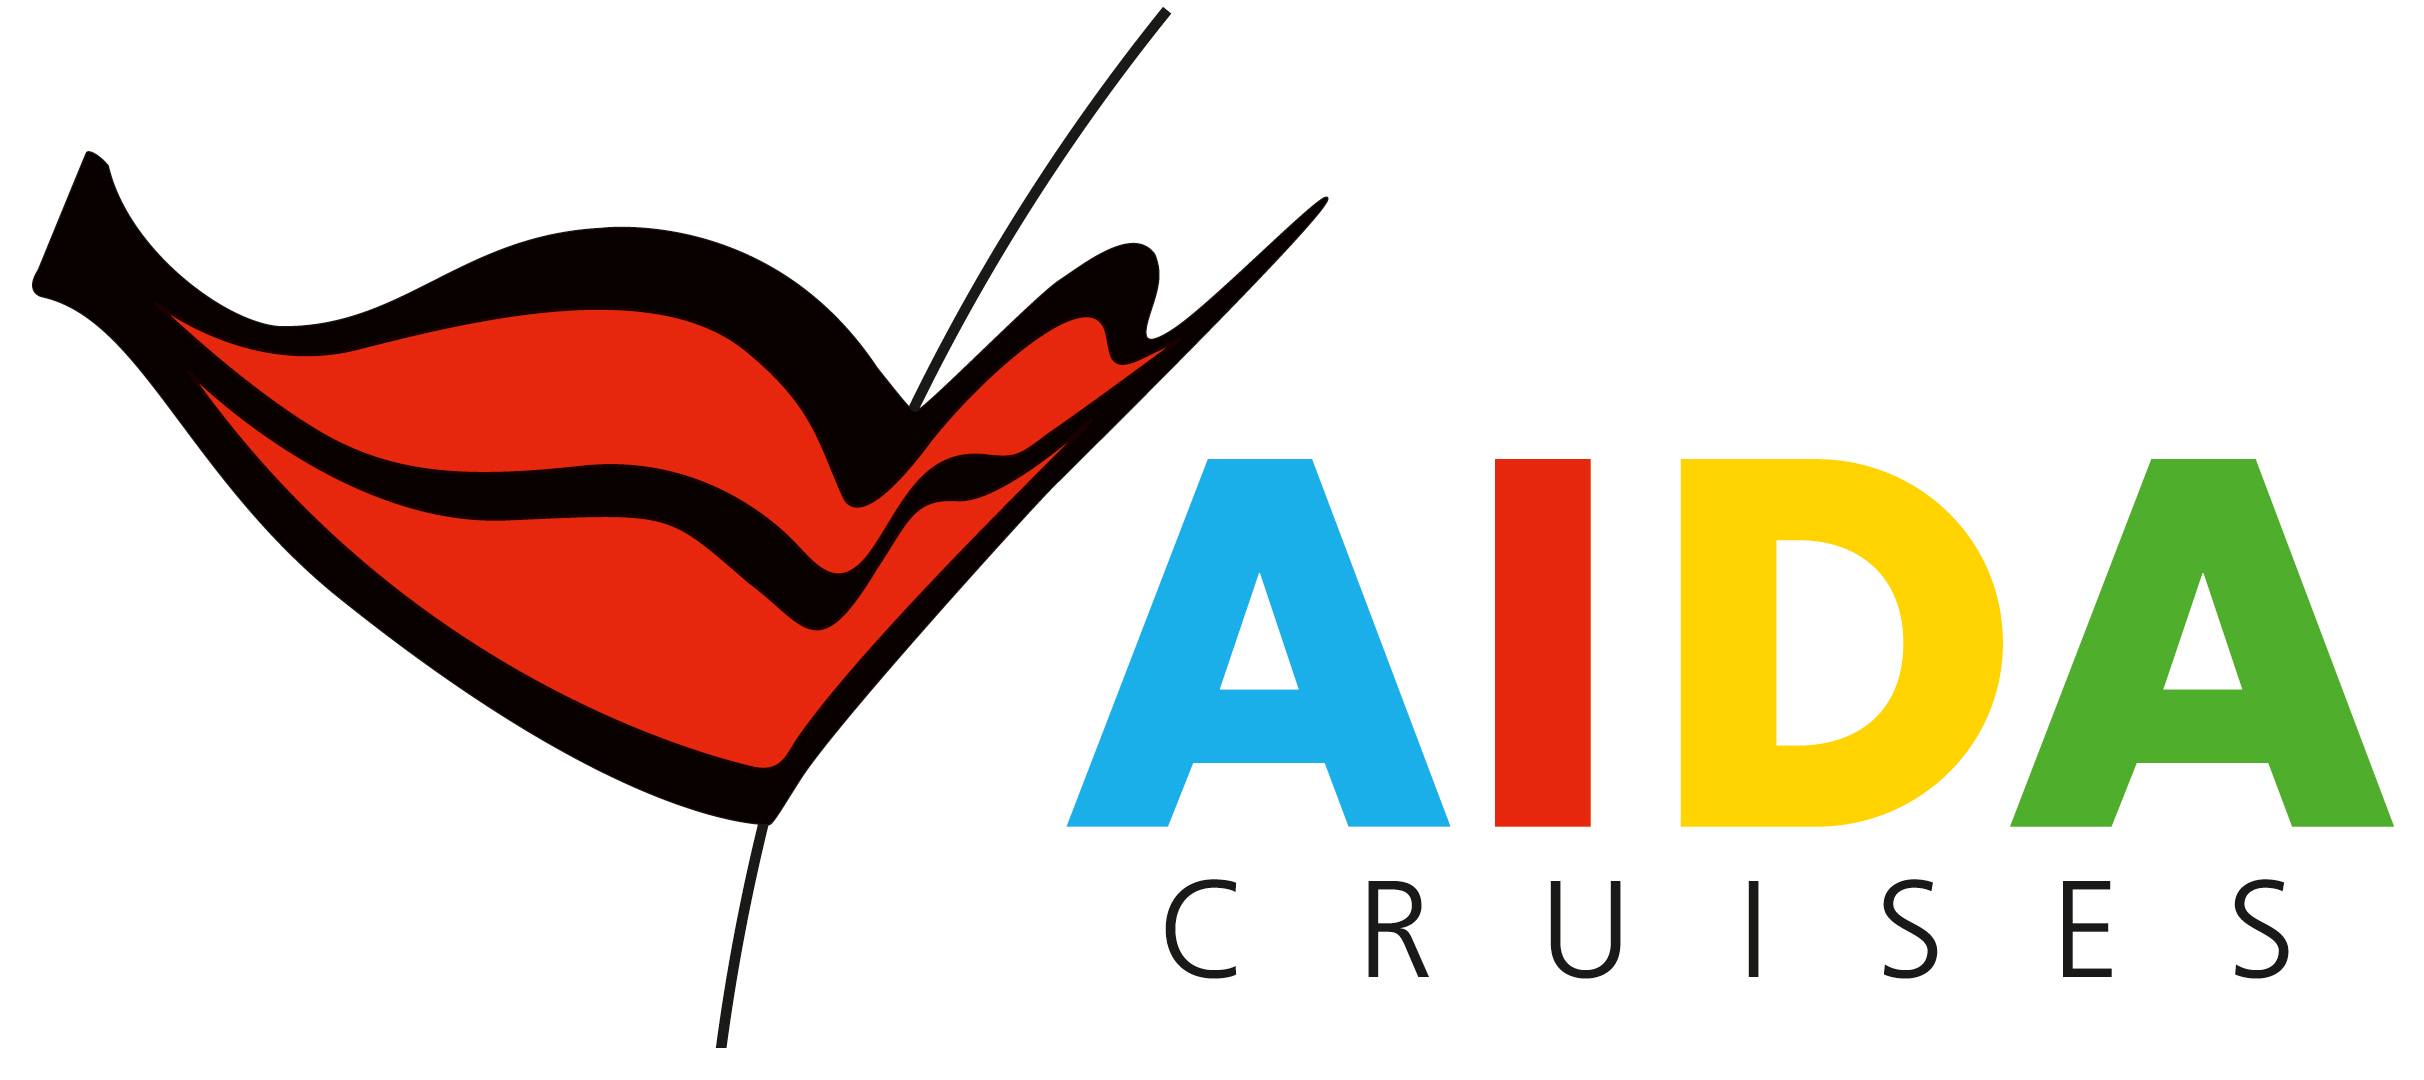 who owns aida cruises